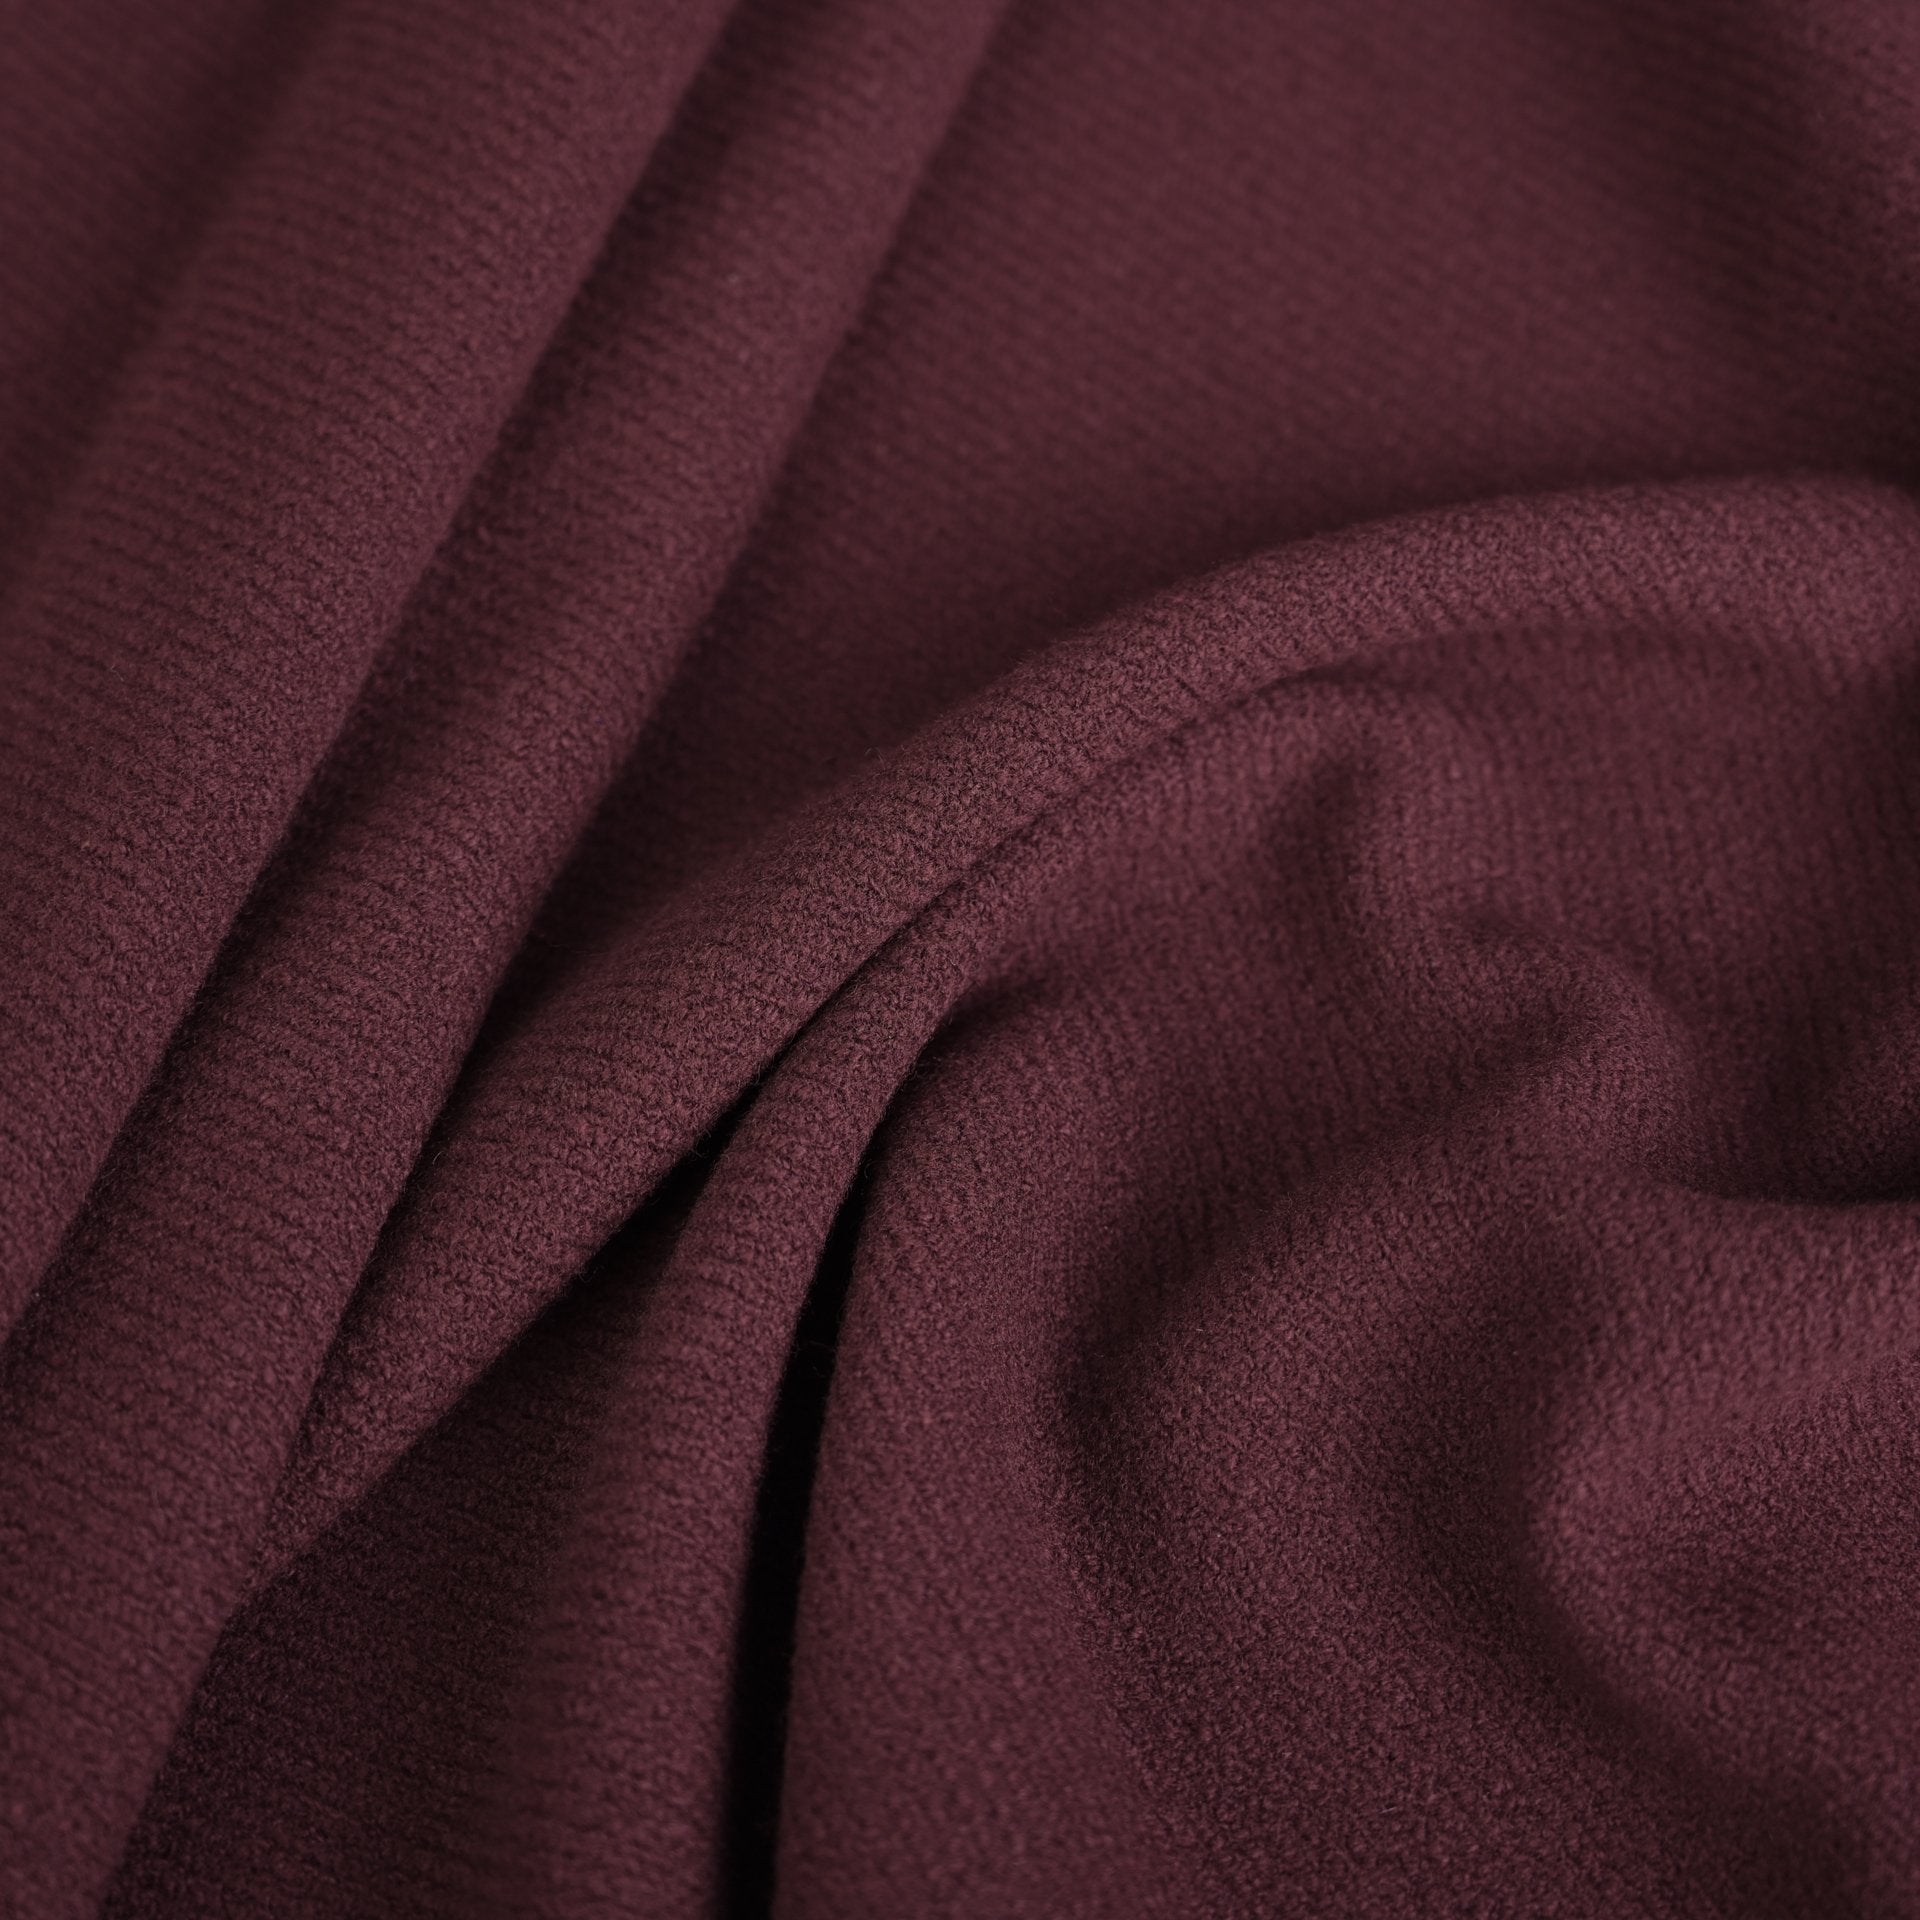 Wine Red Coating Fabric 4287 – Fabrics4Fashion